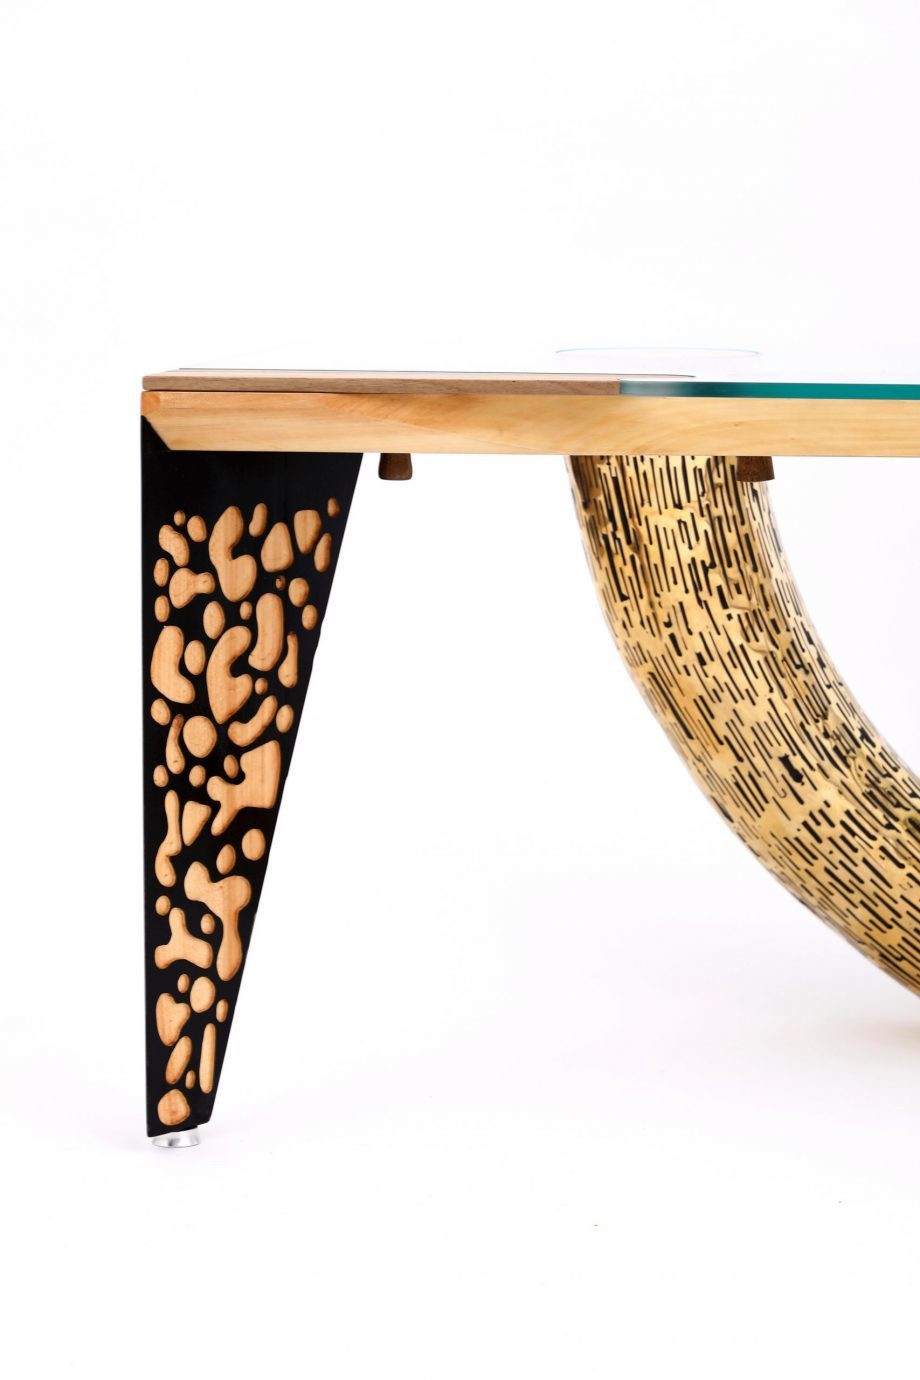 Atelier Hlavina: Šimon Majlát – Mammoth tusk – coffee table